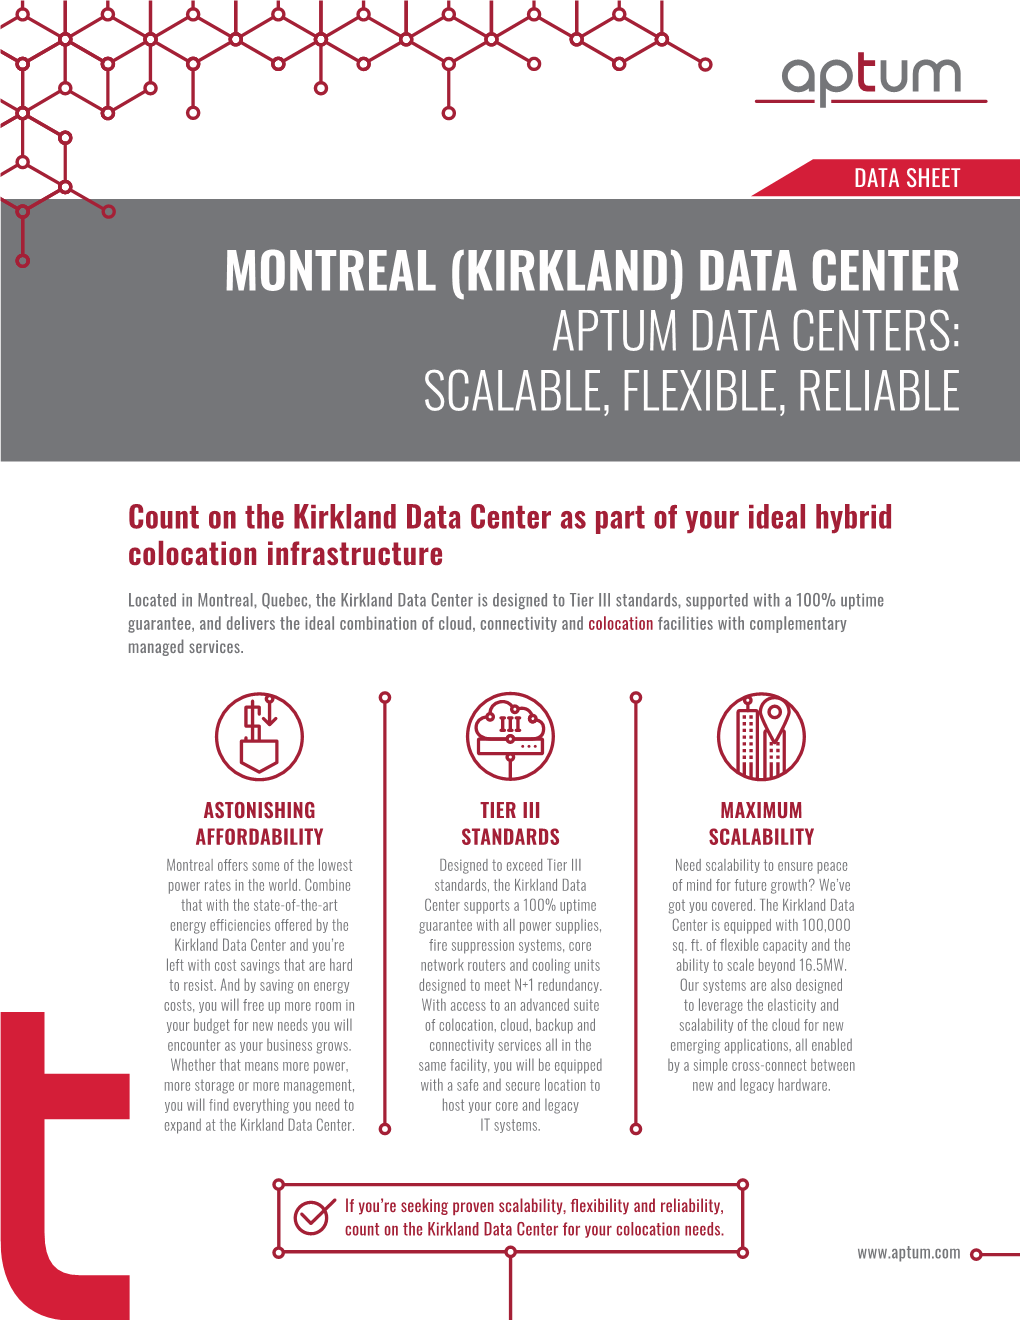 Montreal (Kirkland) Data Center Aptum Data Centers: Scalable, Flexible, Reliable